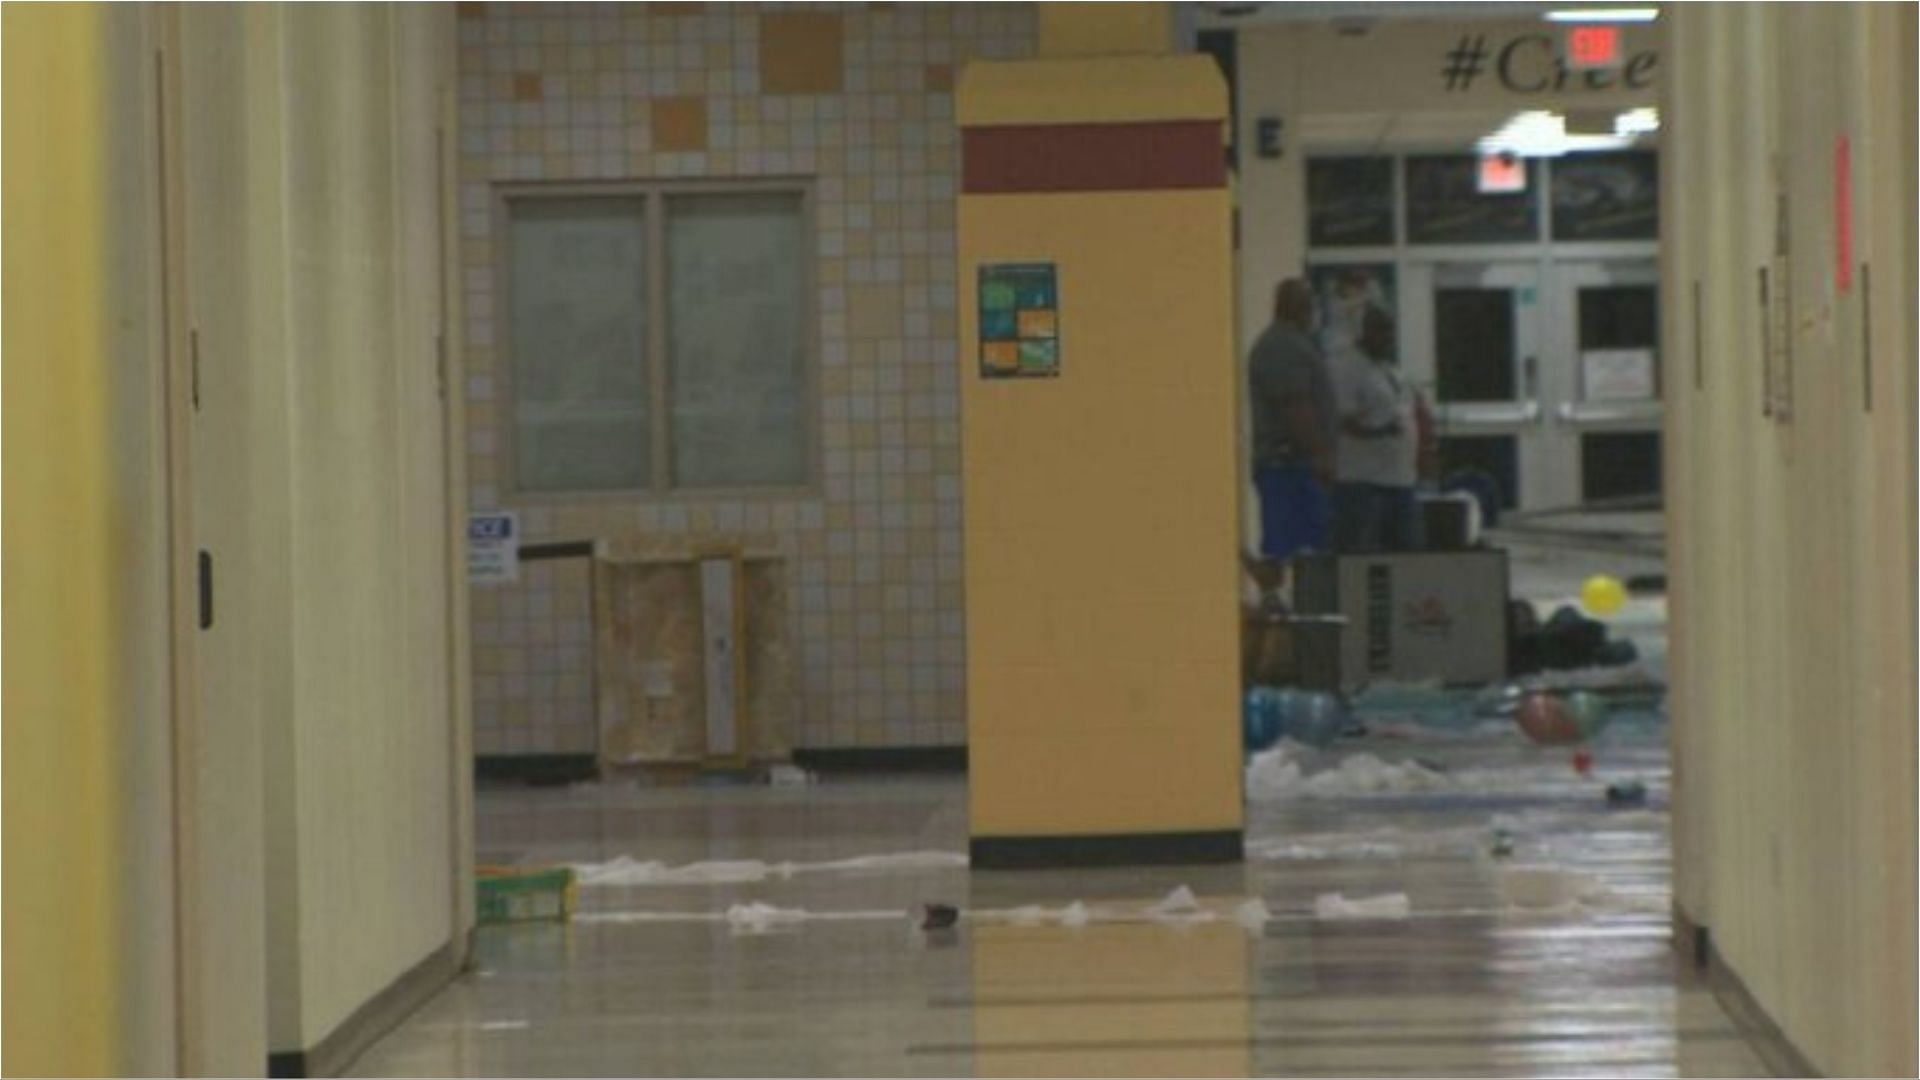 Mallard Creek High School was also vandalized by around 50 students (Image via JonathanUpdates/Twitter)